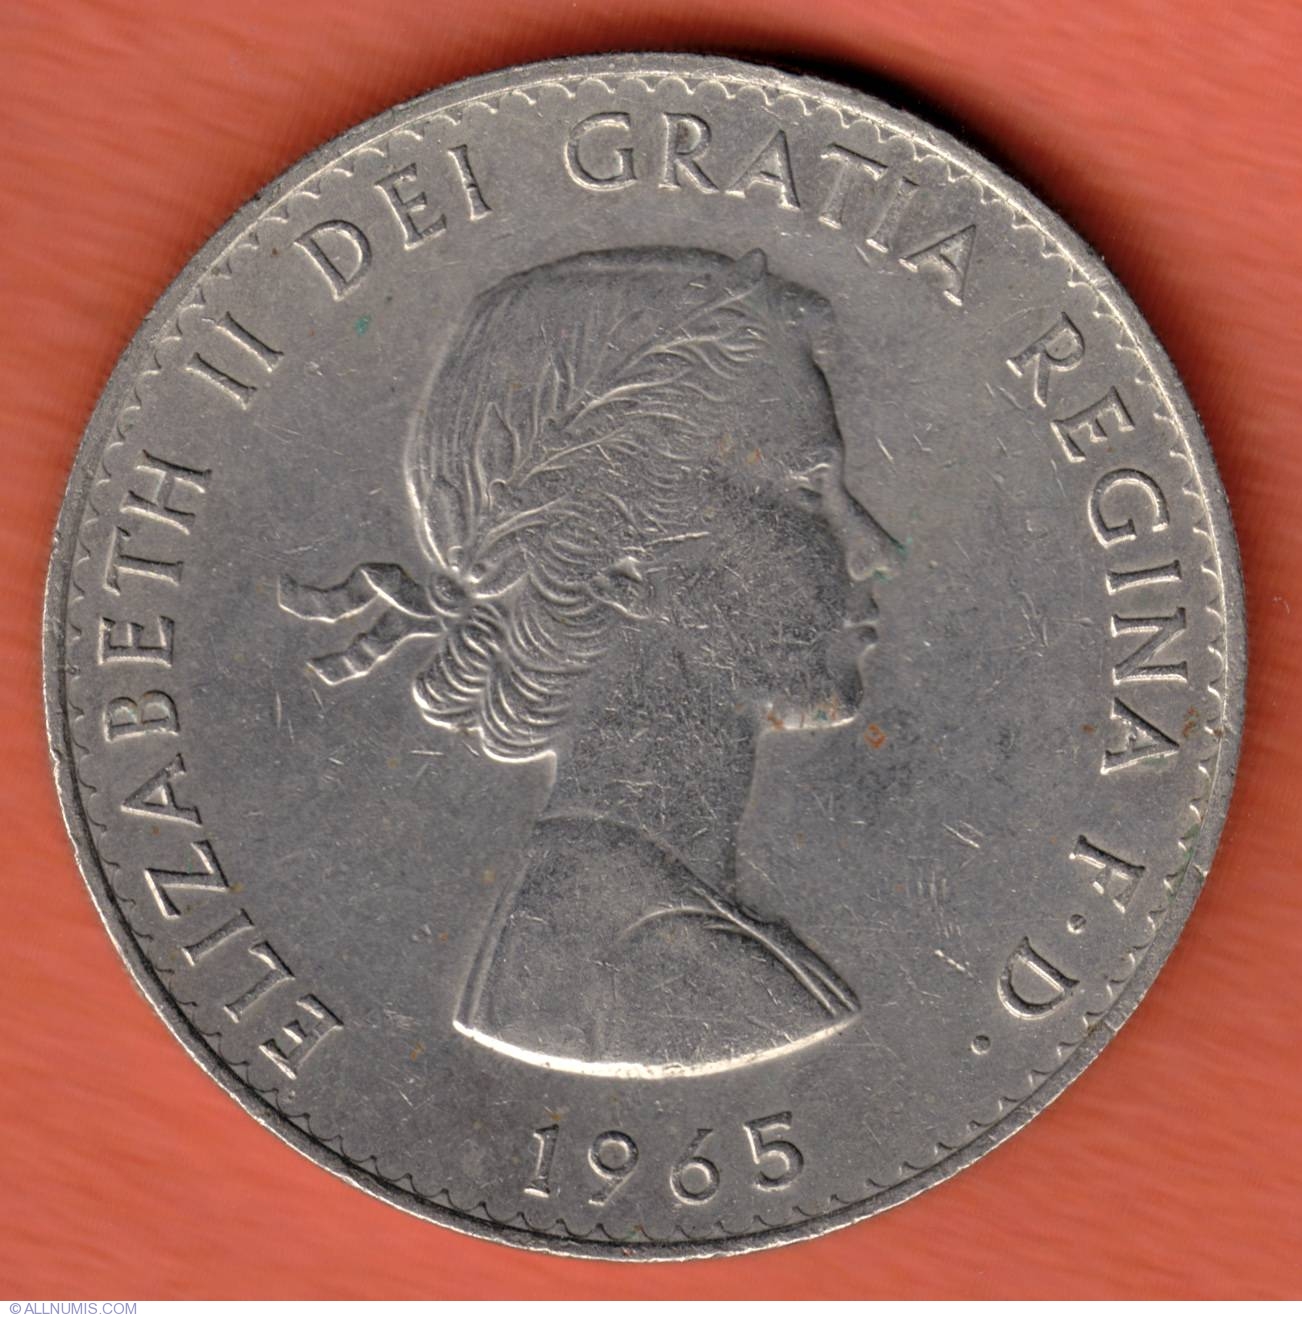 1965 churchill coin silver value